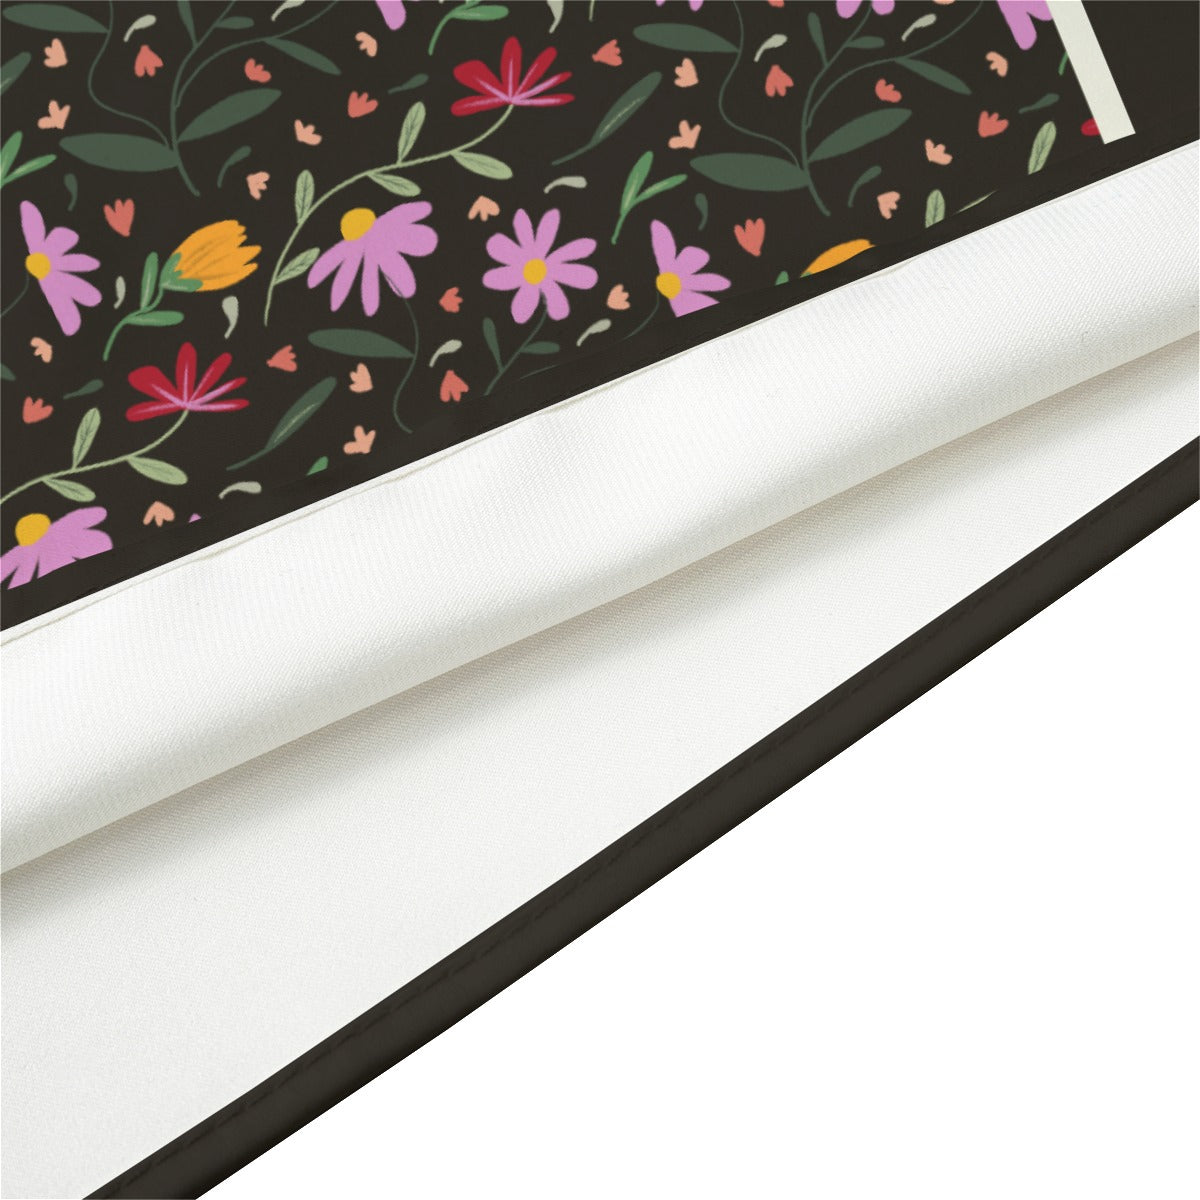 Botanical Black Silk Scarf. Pattern hand-painted by the Designer Maria Alejandra Echenique